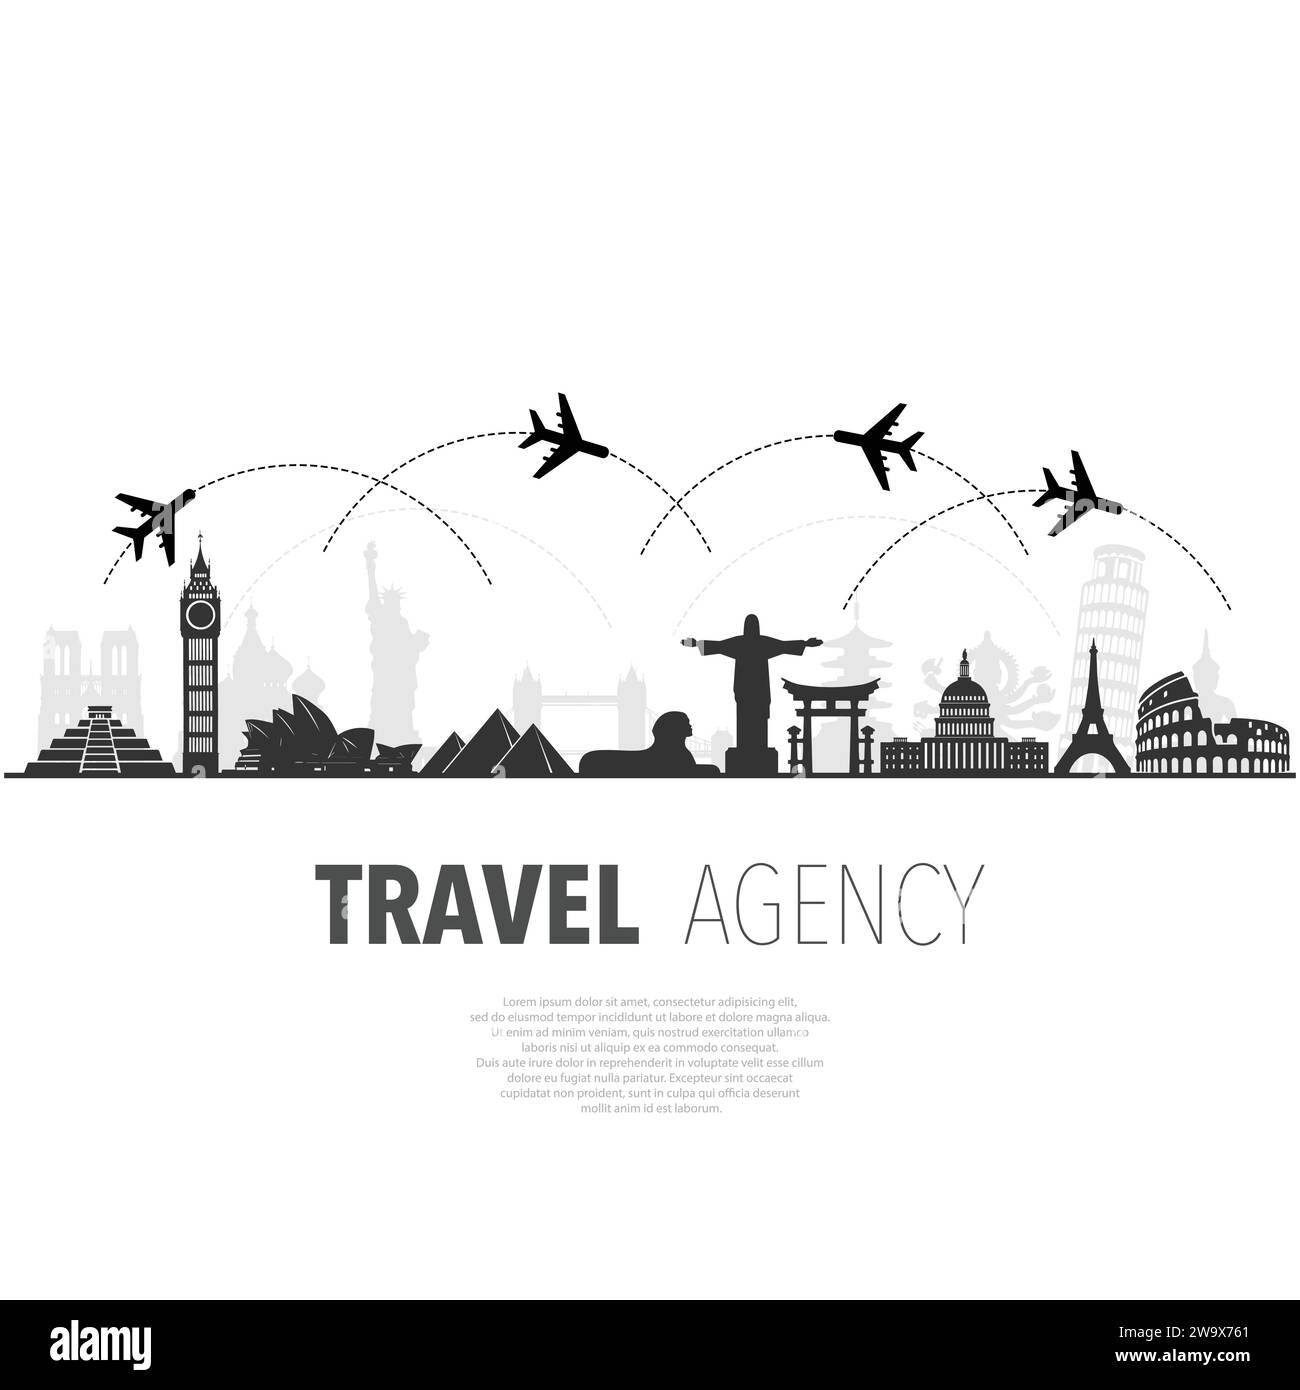 World sights travel agency banner Stock Vector